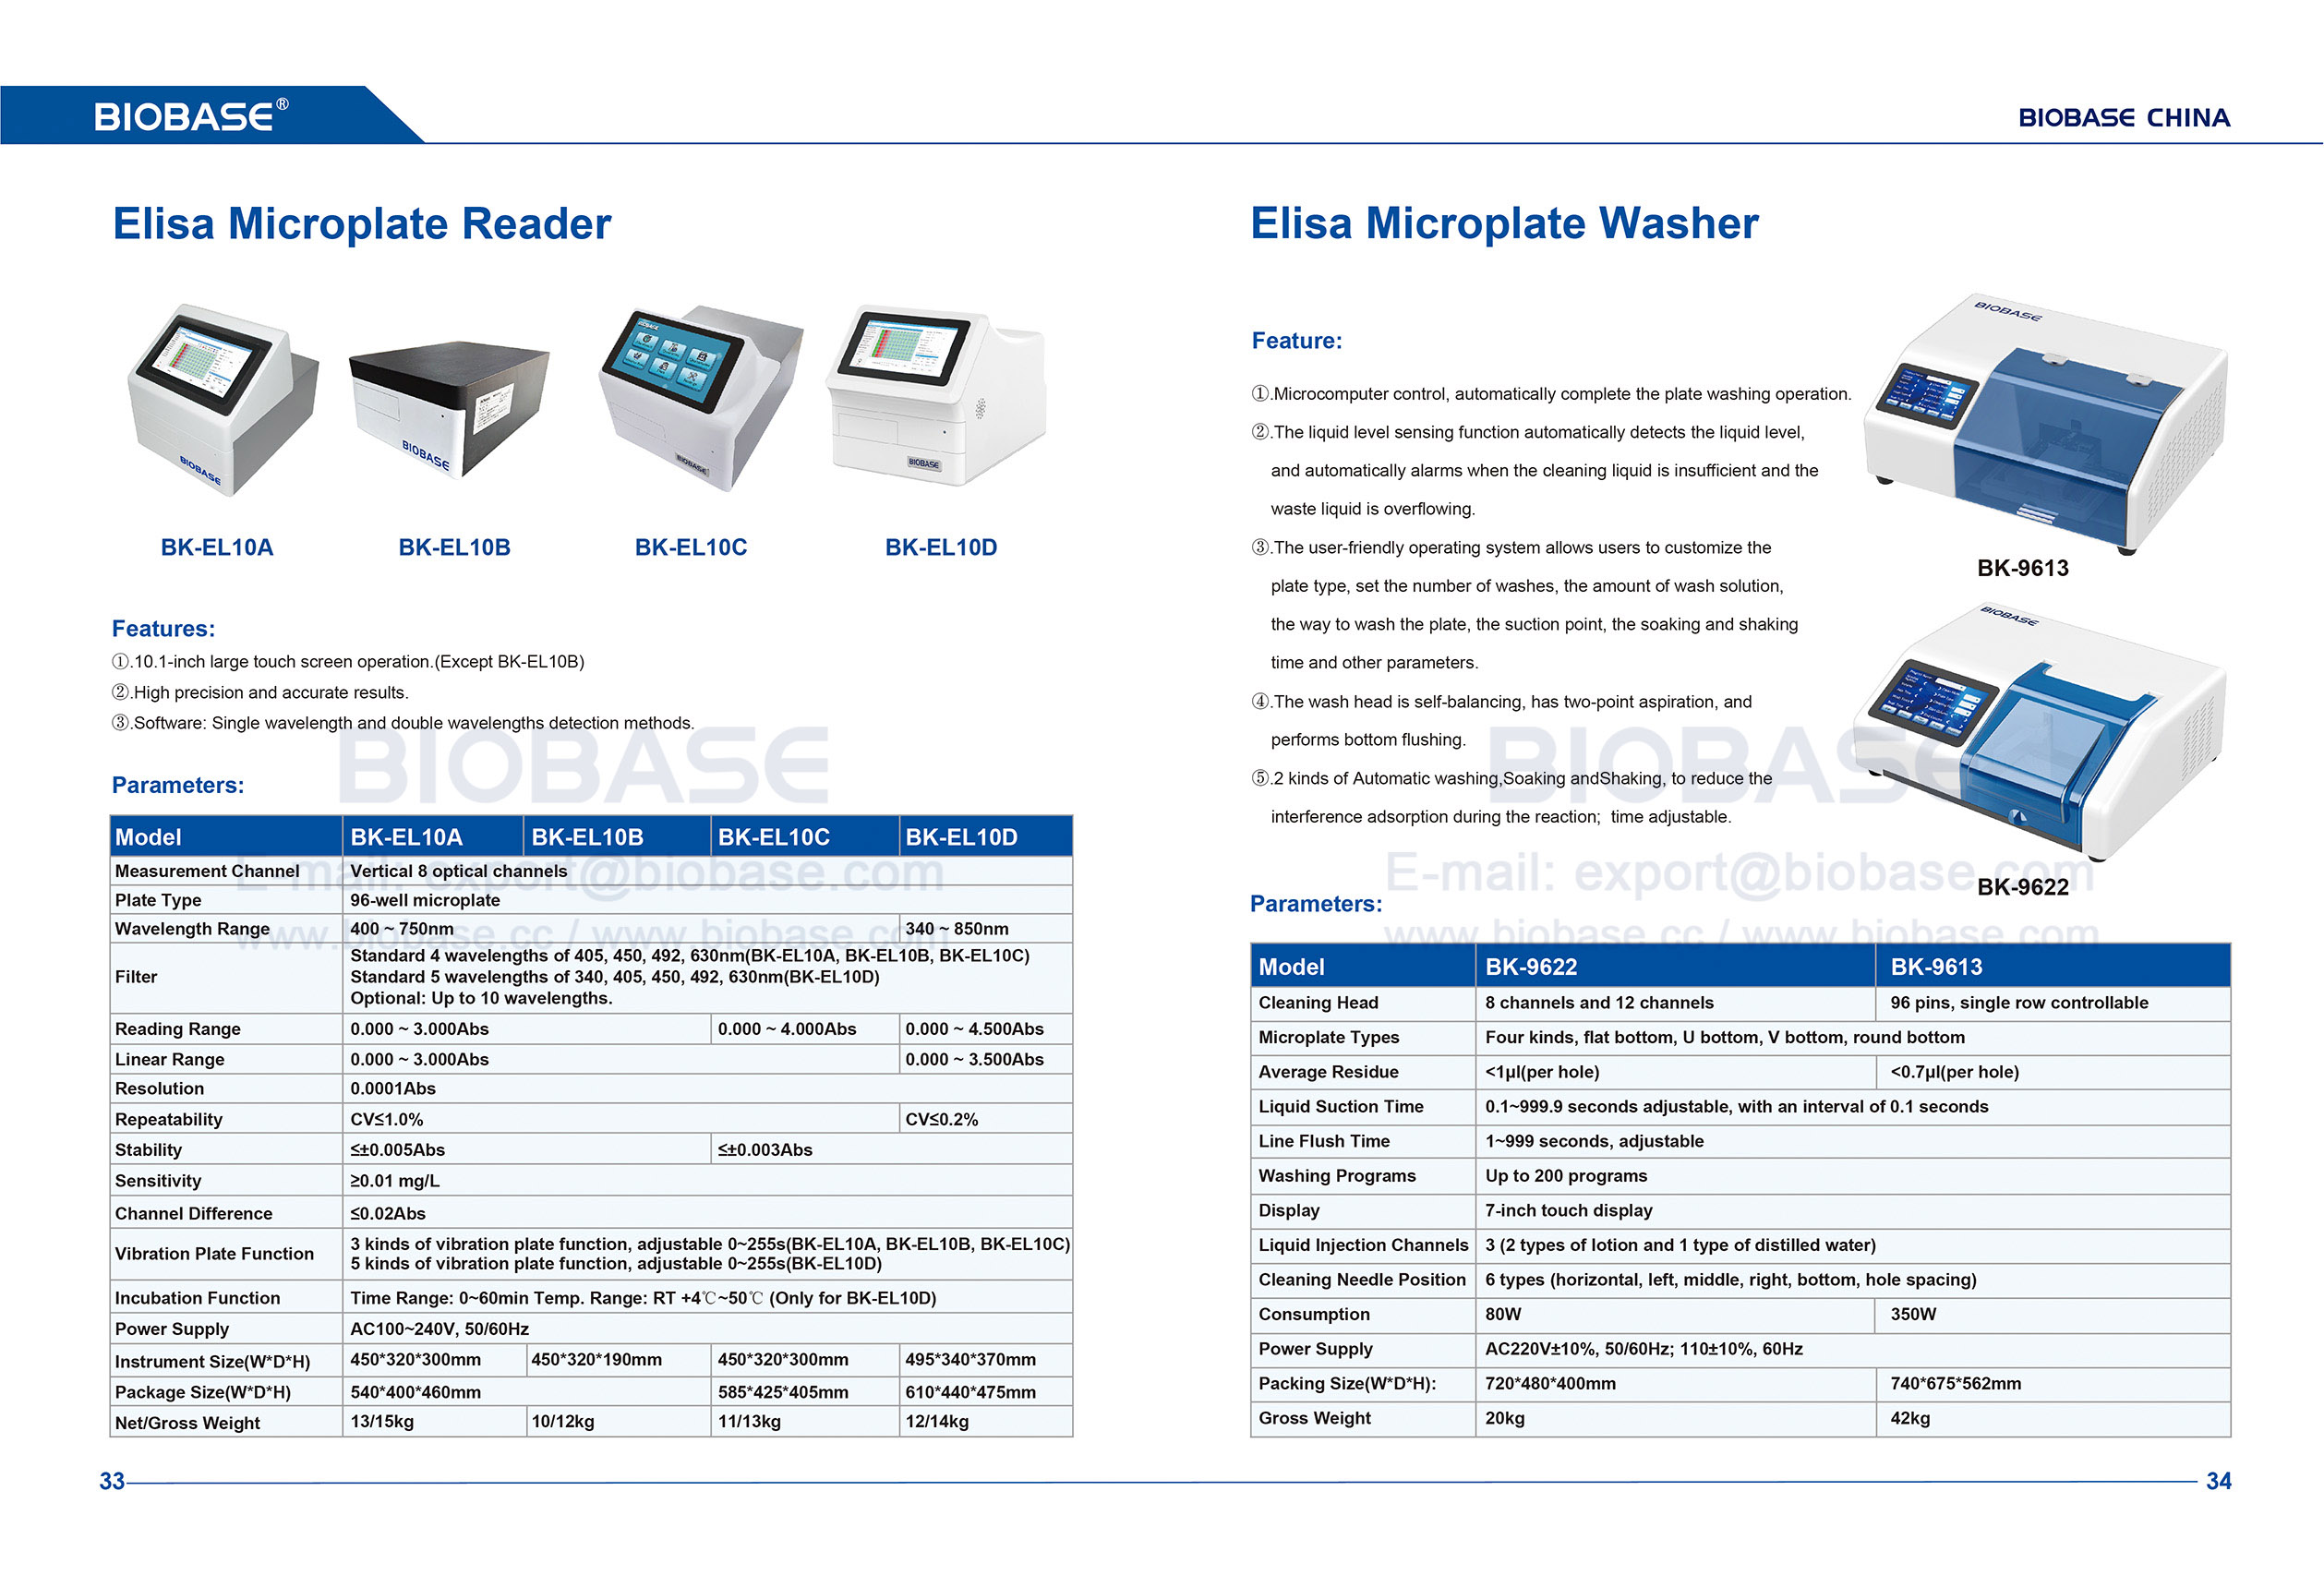 33-34 Elisa Microplate Reader& Elisa Microplate Washer